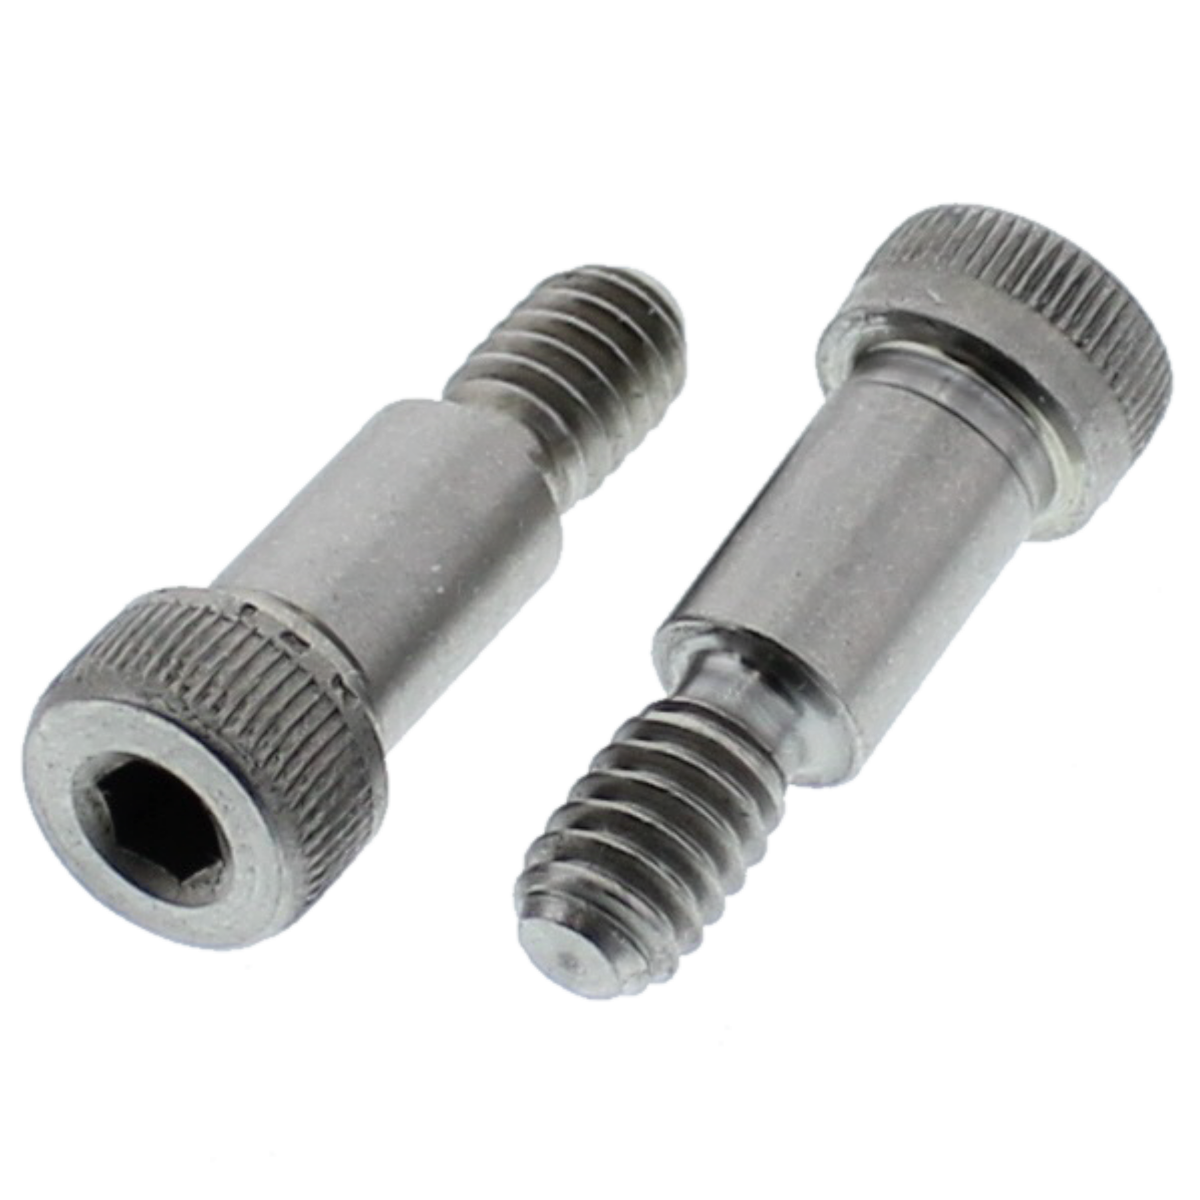 1/2" x 1" Socket Shoulder Screws — 18-8 Stainless Steel, Coarse Thread, 25/PKG